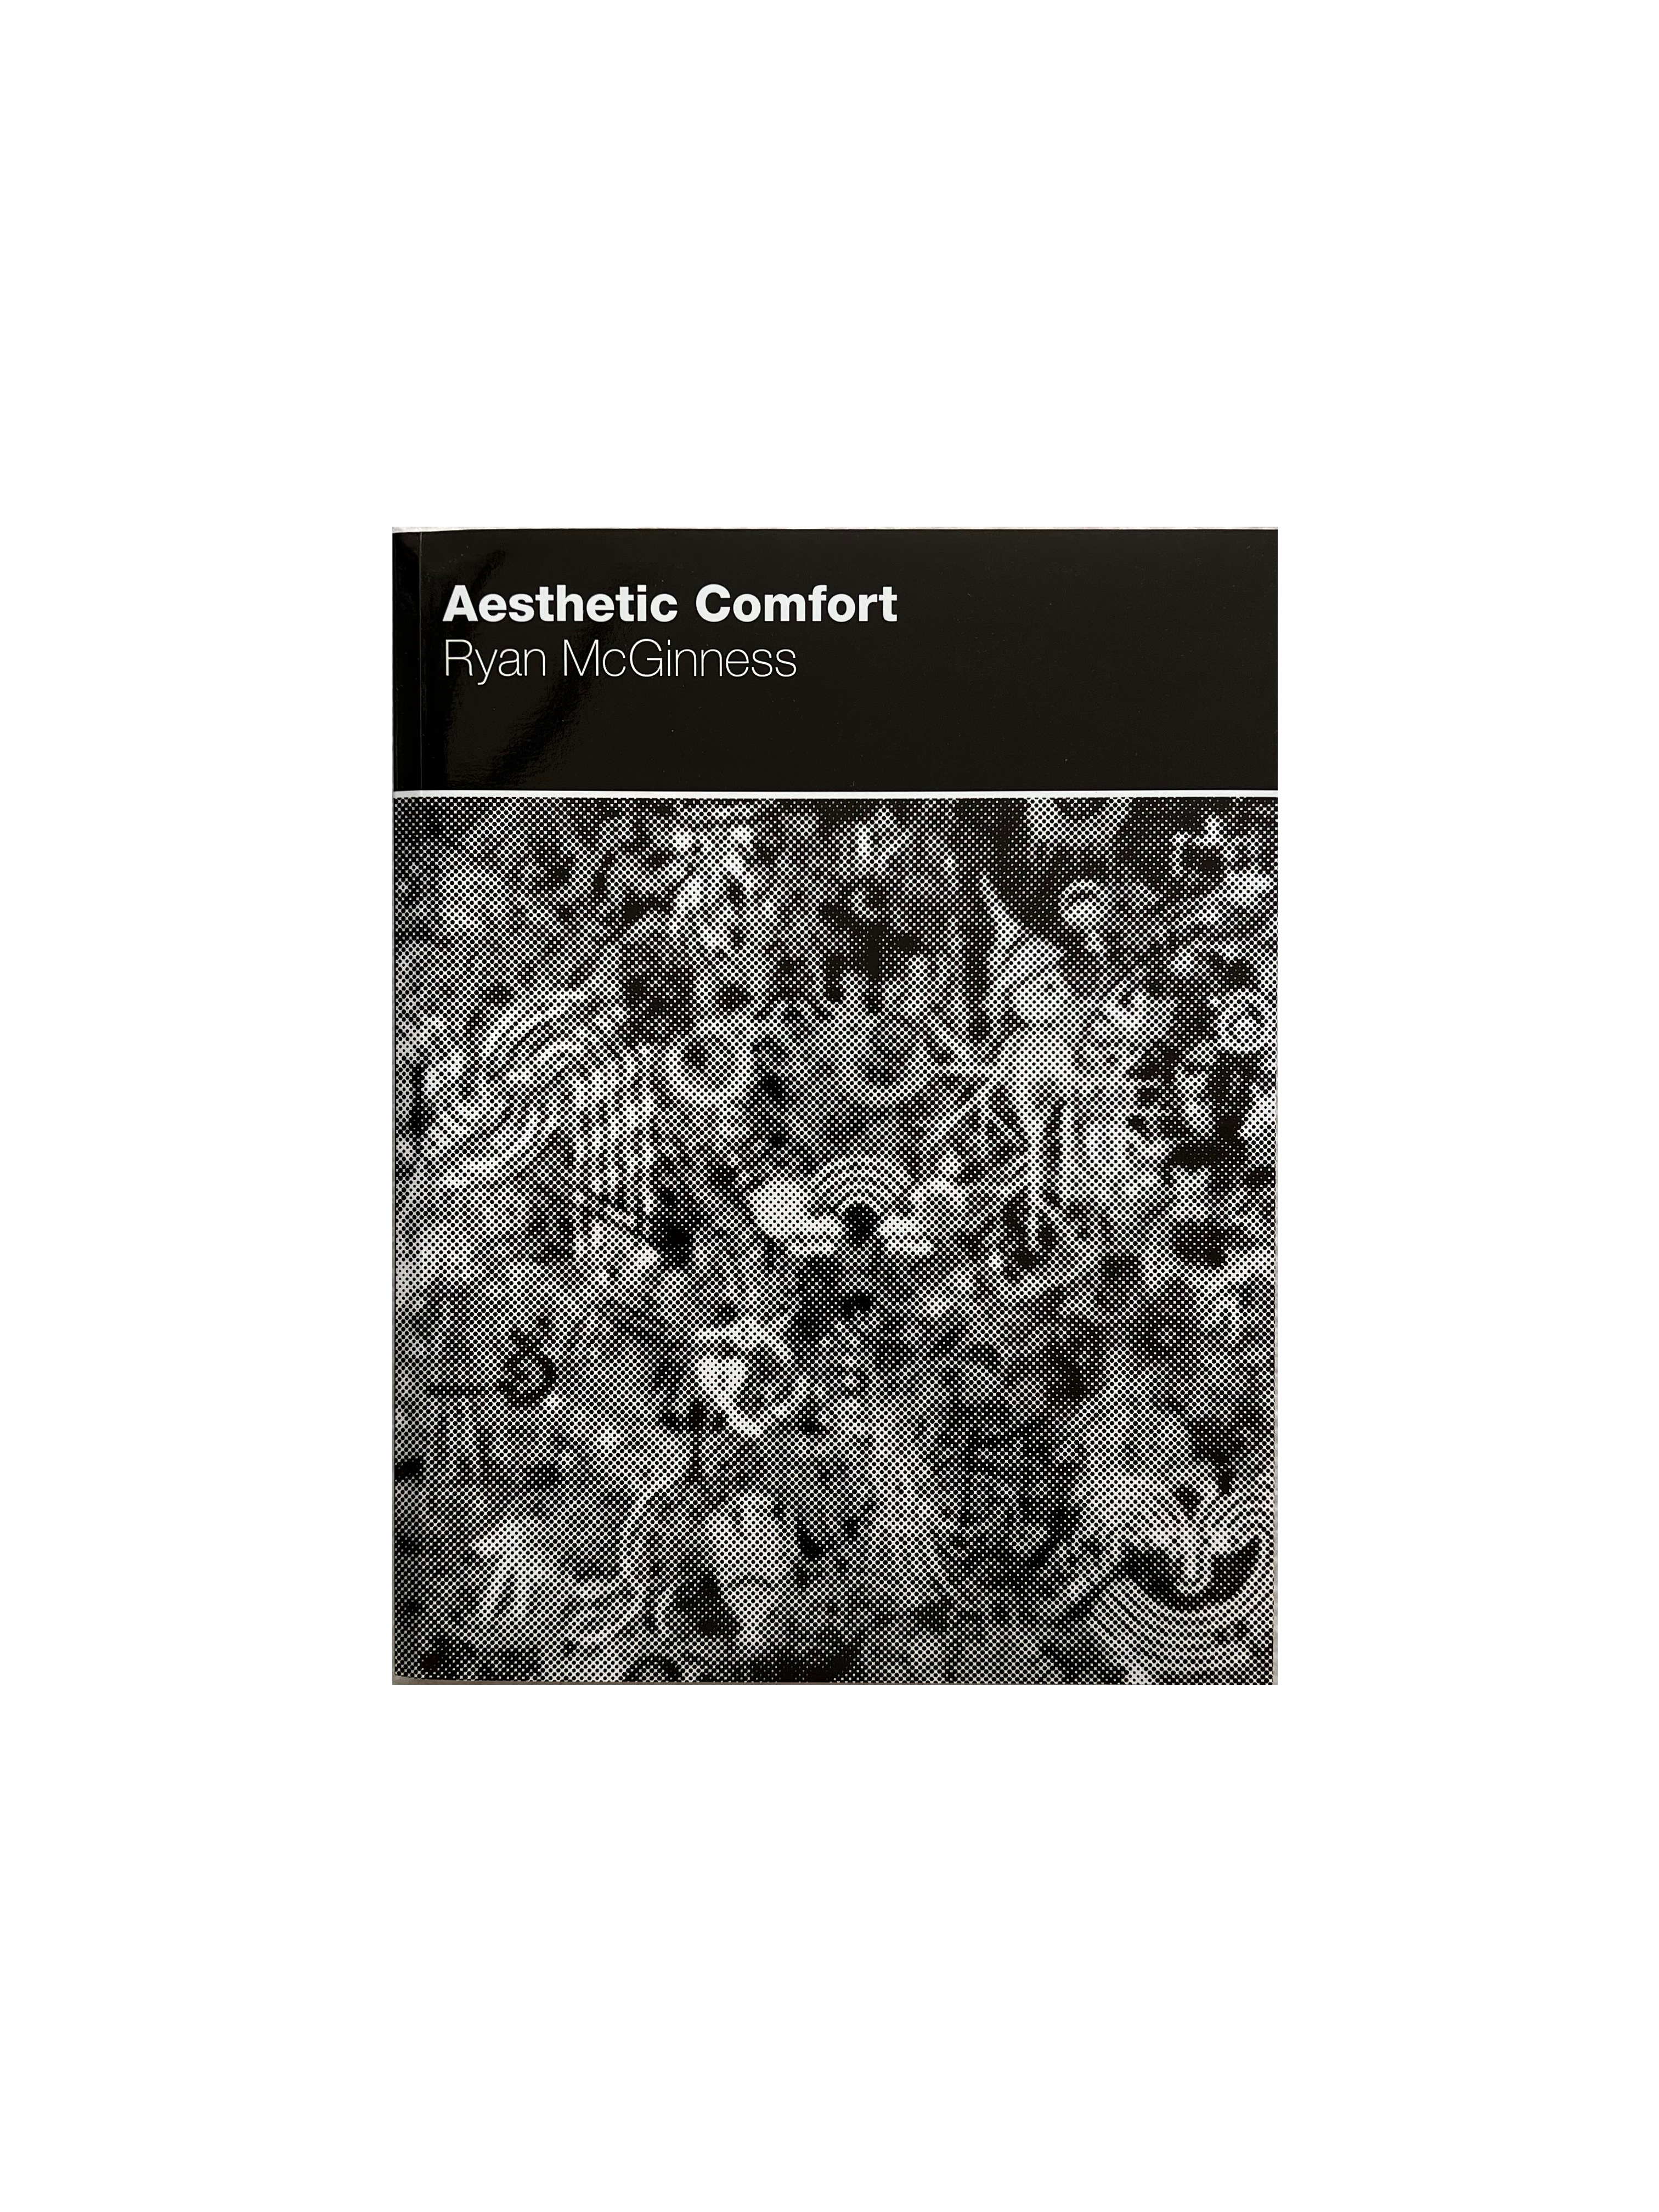 Ryan McGinness, Aesthetic Comfort (Arkitip 48), 2008